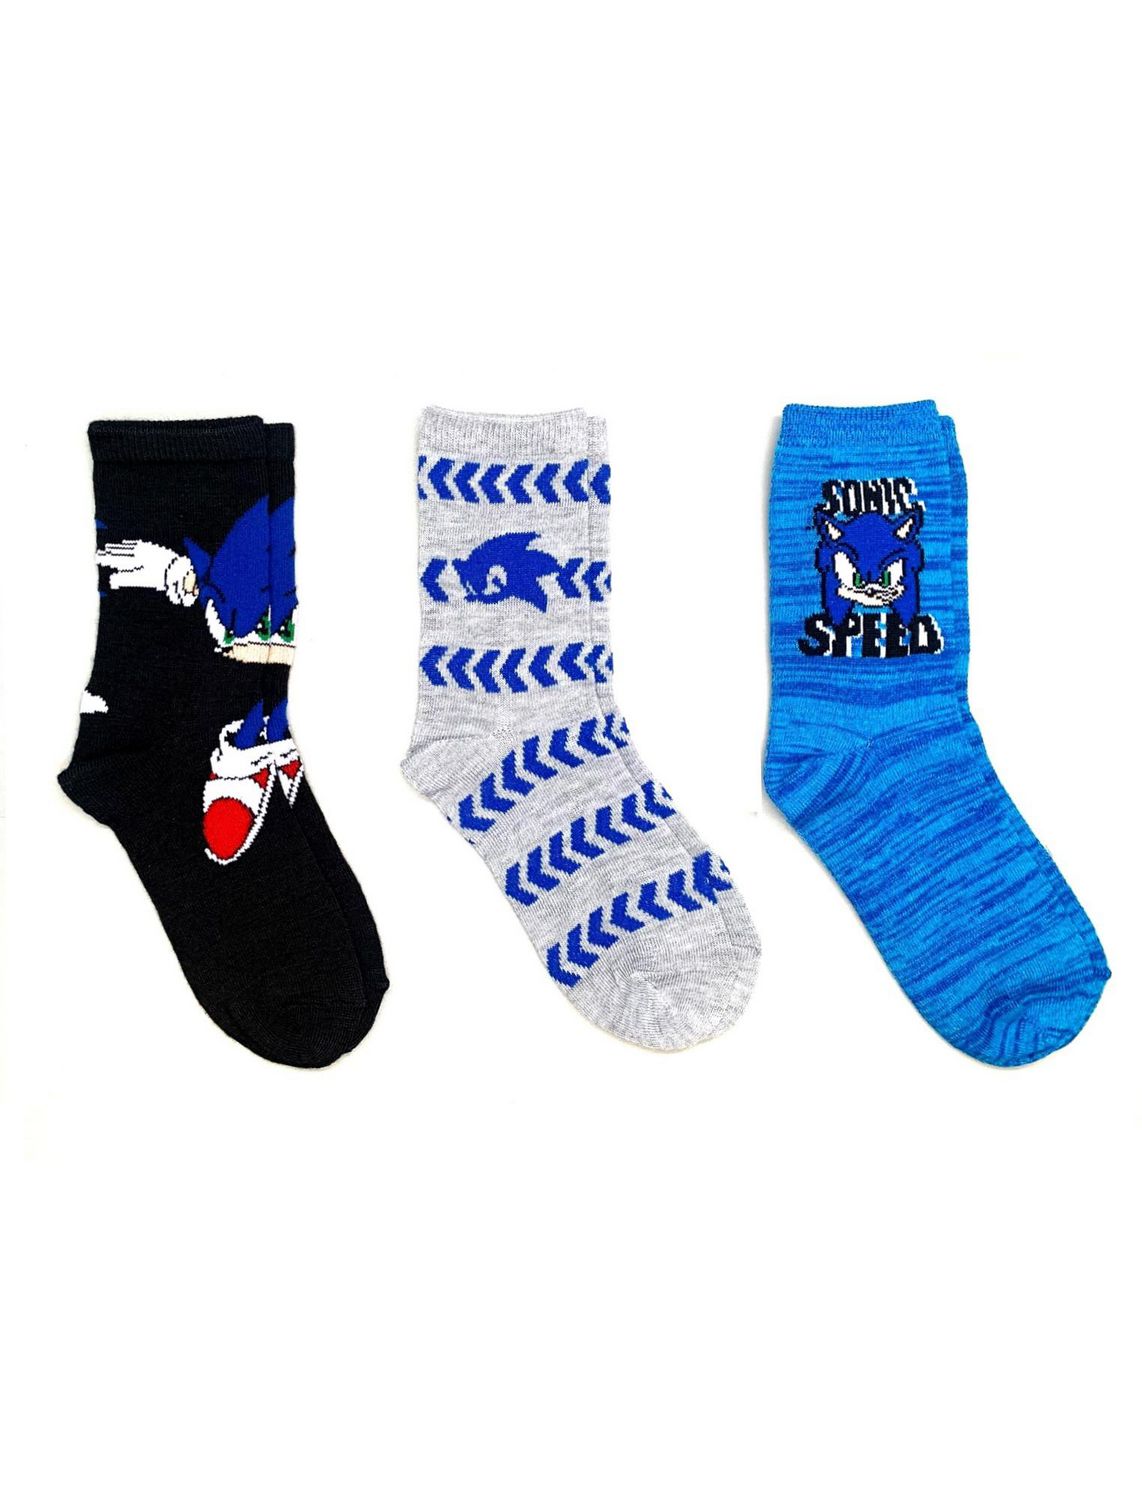 Sonic Boys' Crew Socks, 3 Pack | Walmart Canada